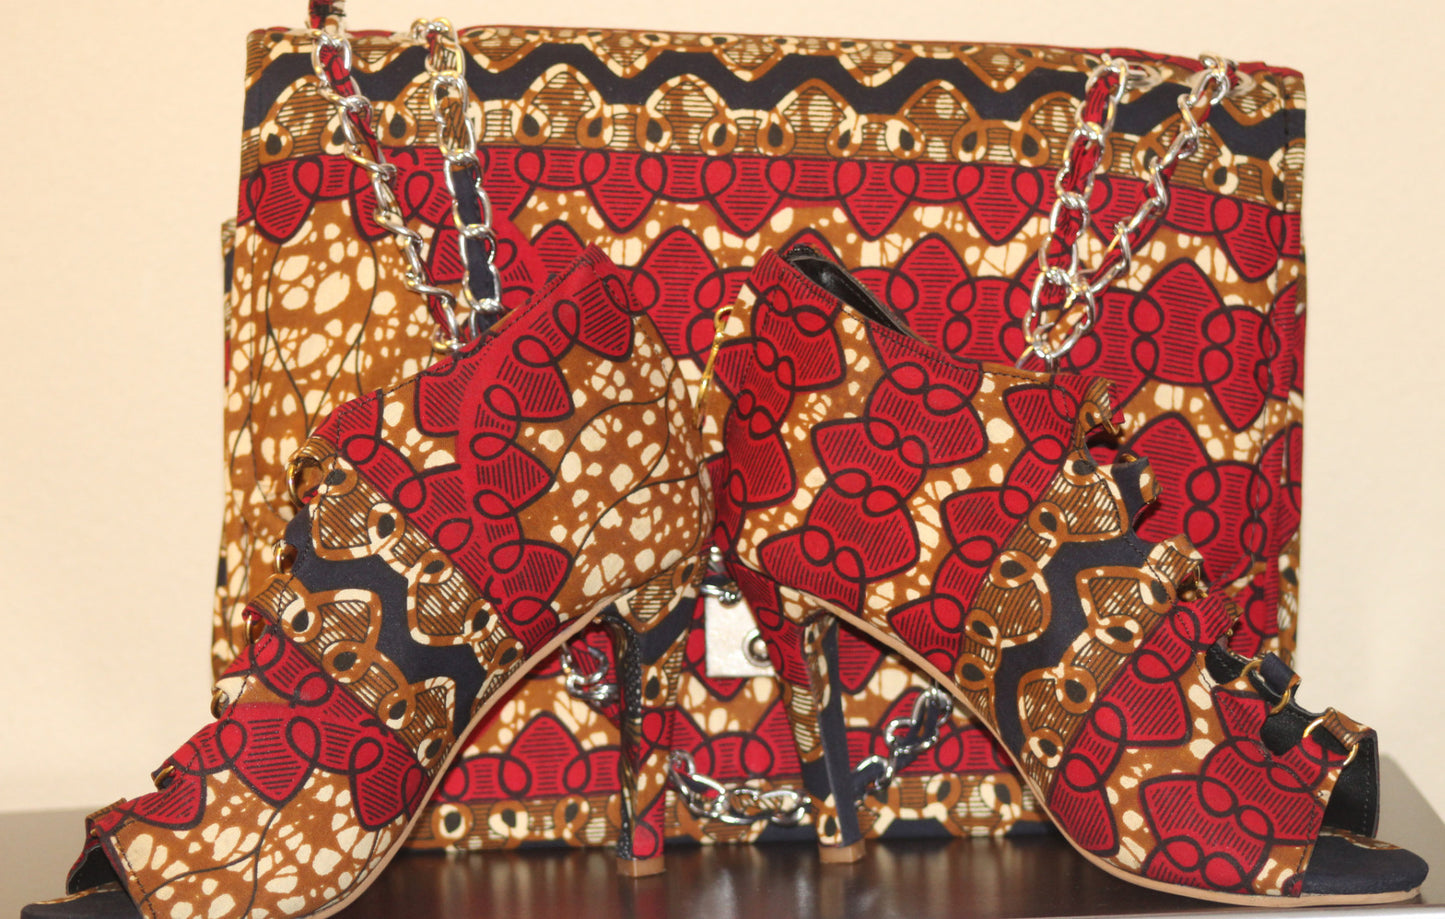 Shoe and Bag Ankara Set - Nubian Goods